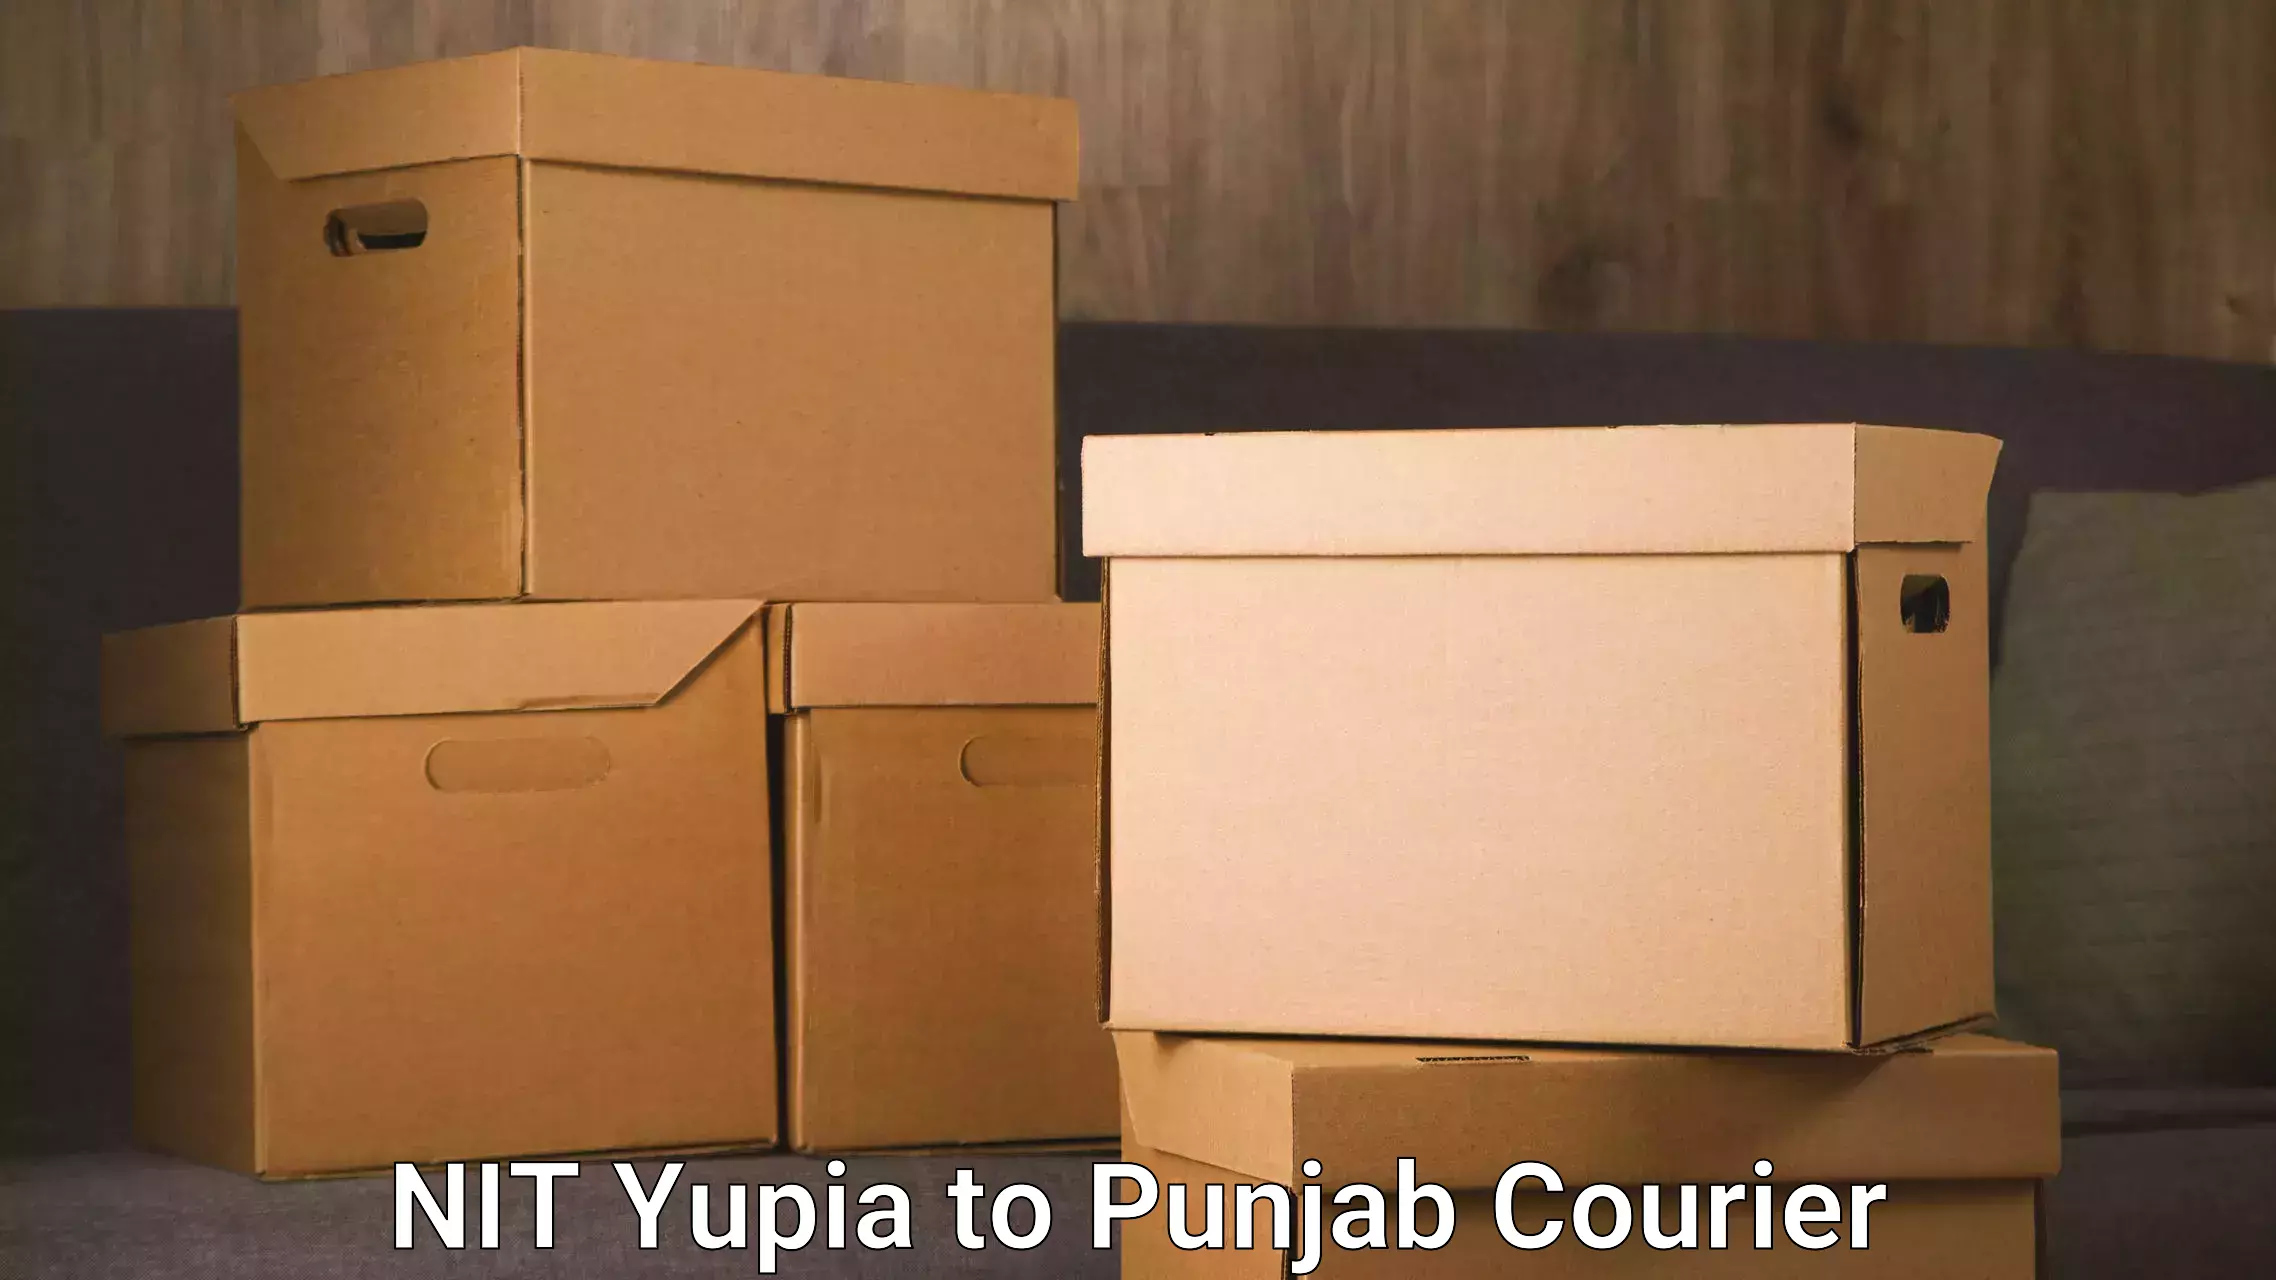 Express courier facilities NIT Yupia to Punjab